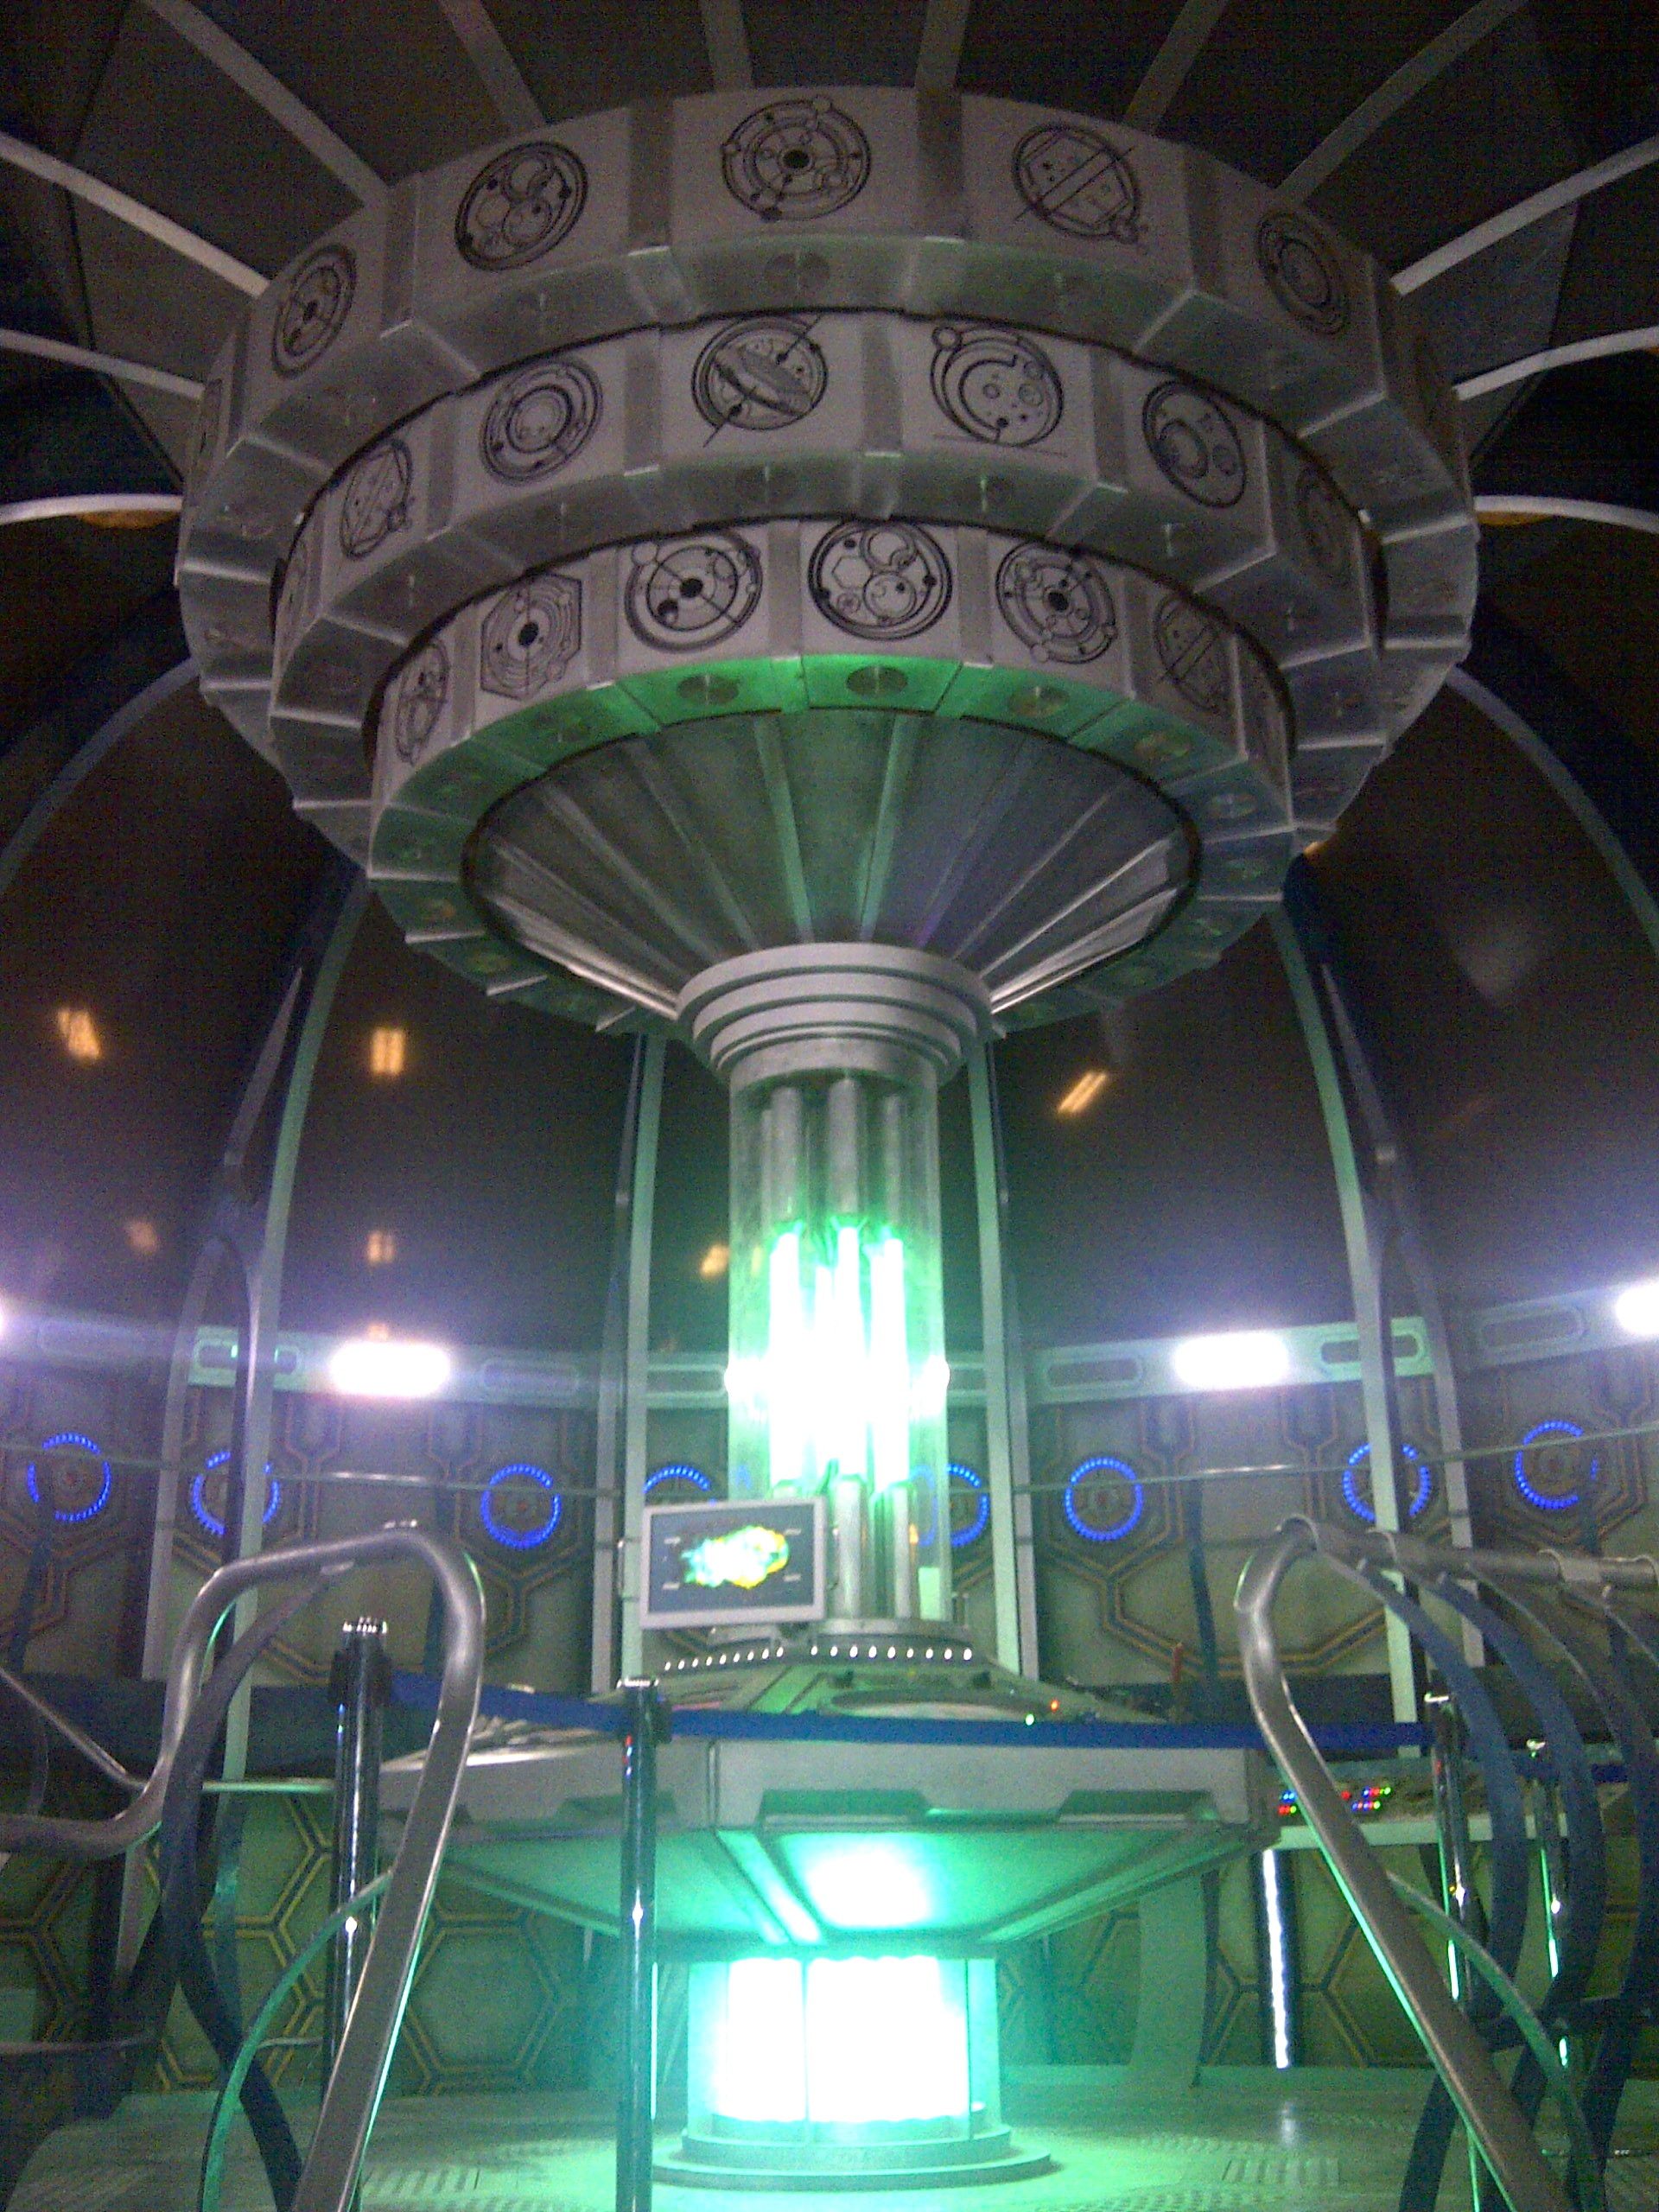 11th Doctor Who Tardis Interior .wallpapertip.com